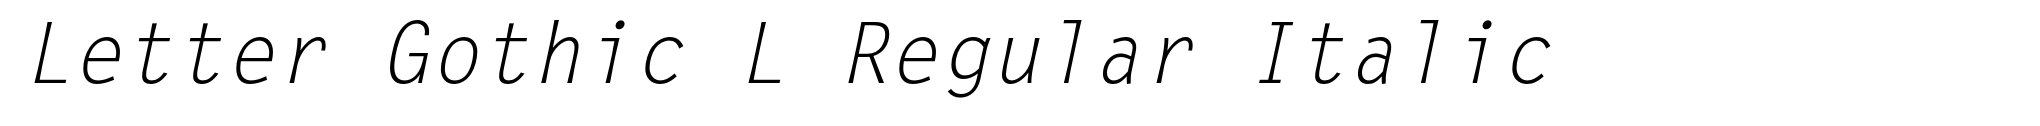 Letter Gothic L Regular Italic image